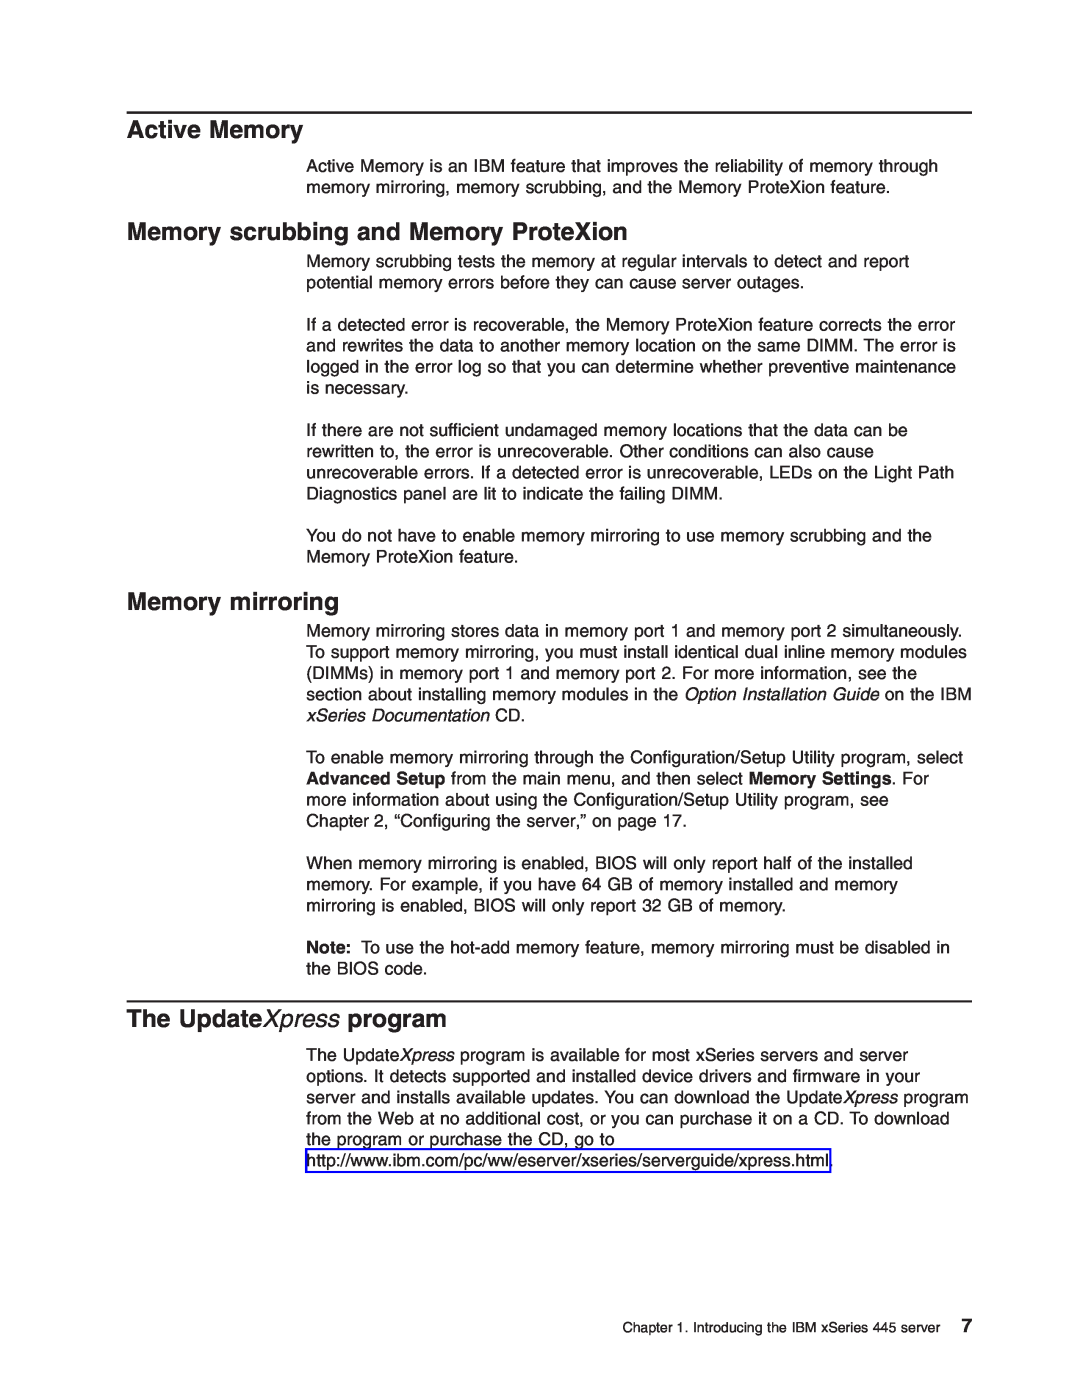 IBM 8870 manual Active Memory, Memory scrubbing and Memory ProteXion, Memory mirroring, The UpdateXpress program 